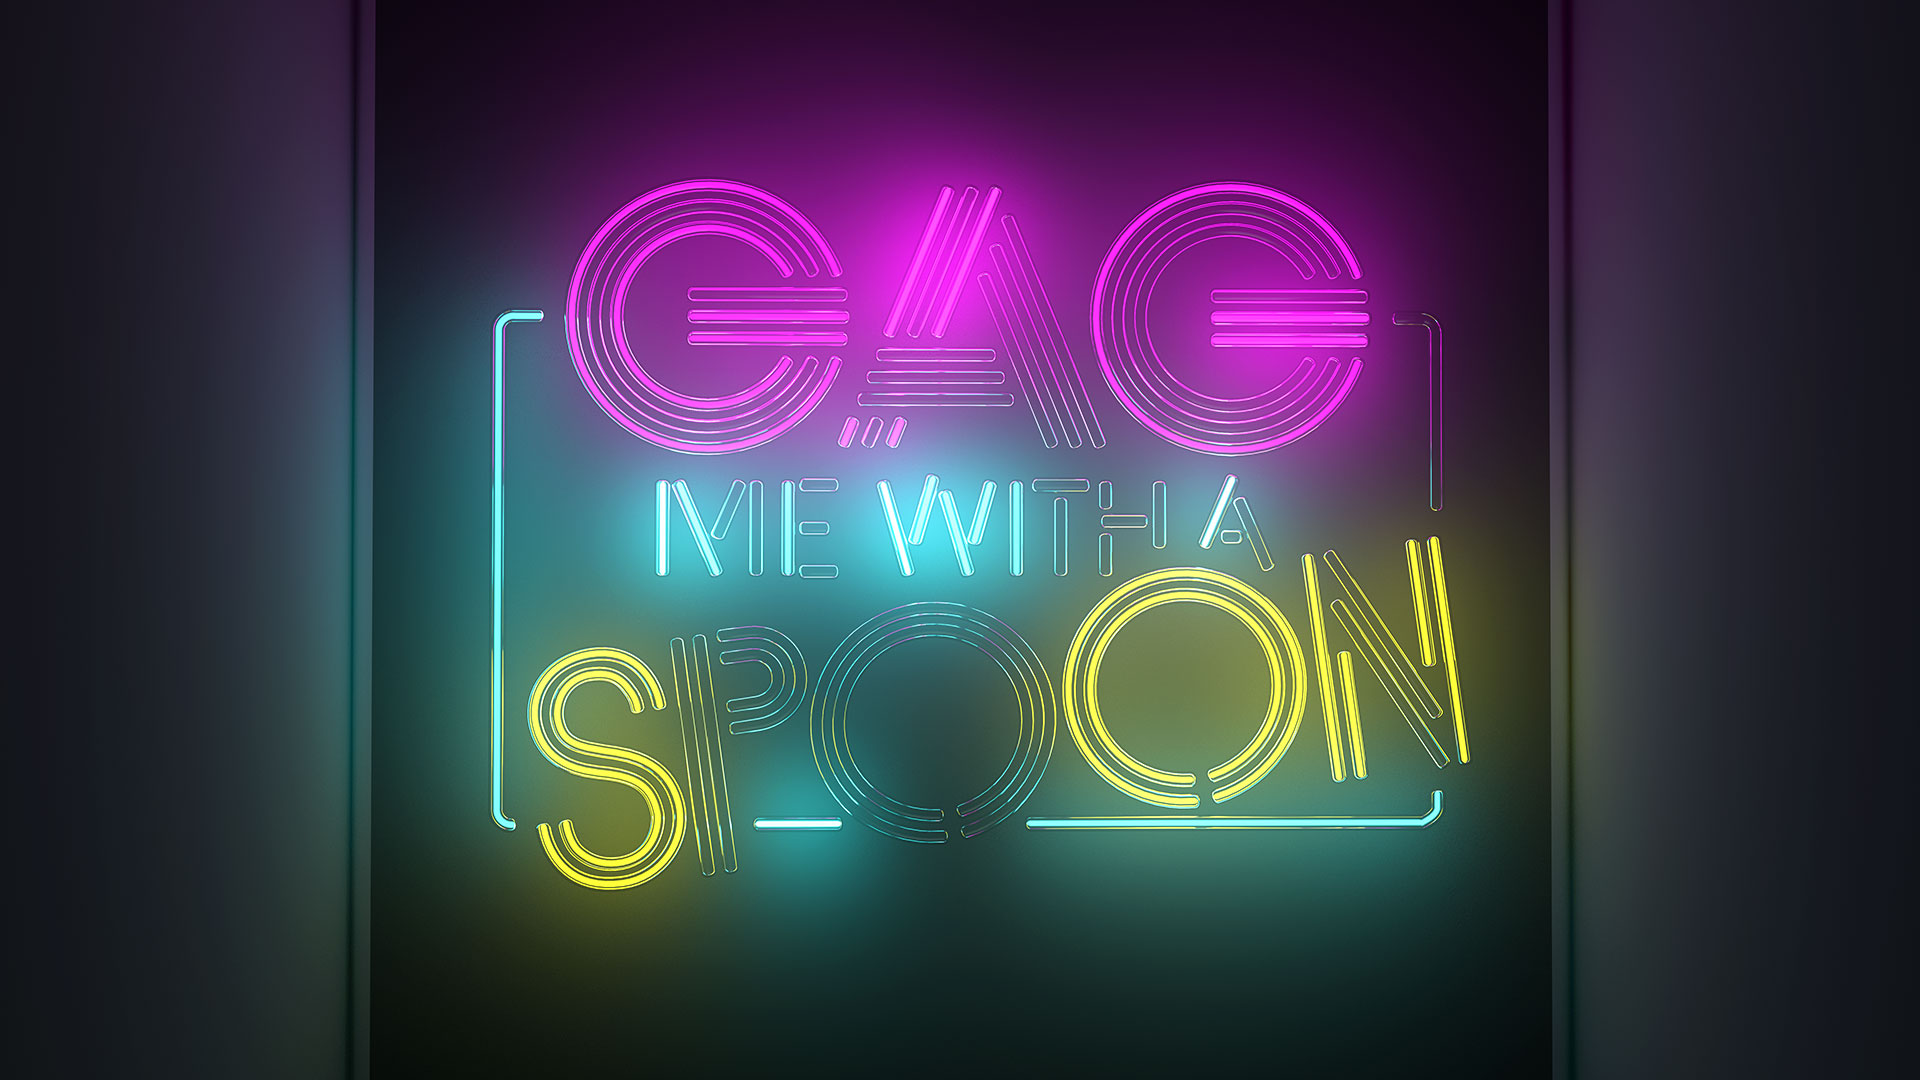 Logo rendered in 3D neon tubes